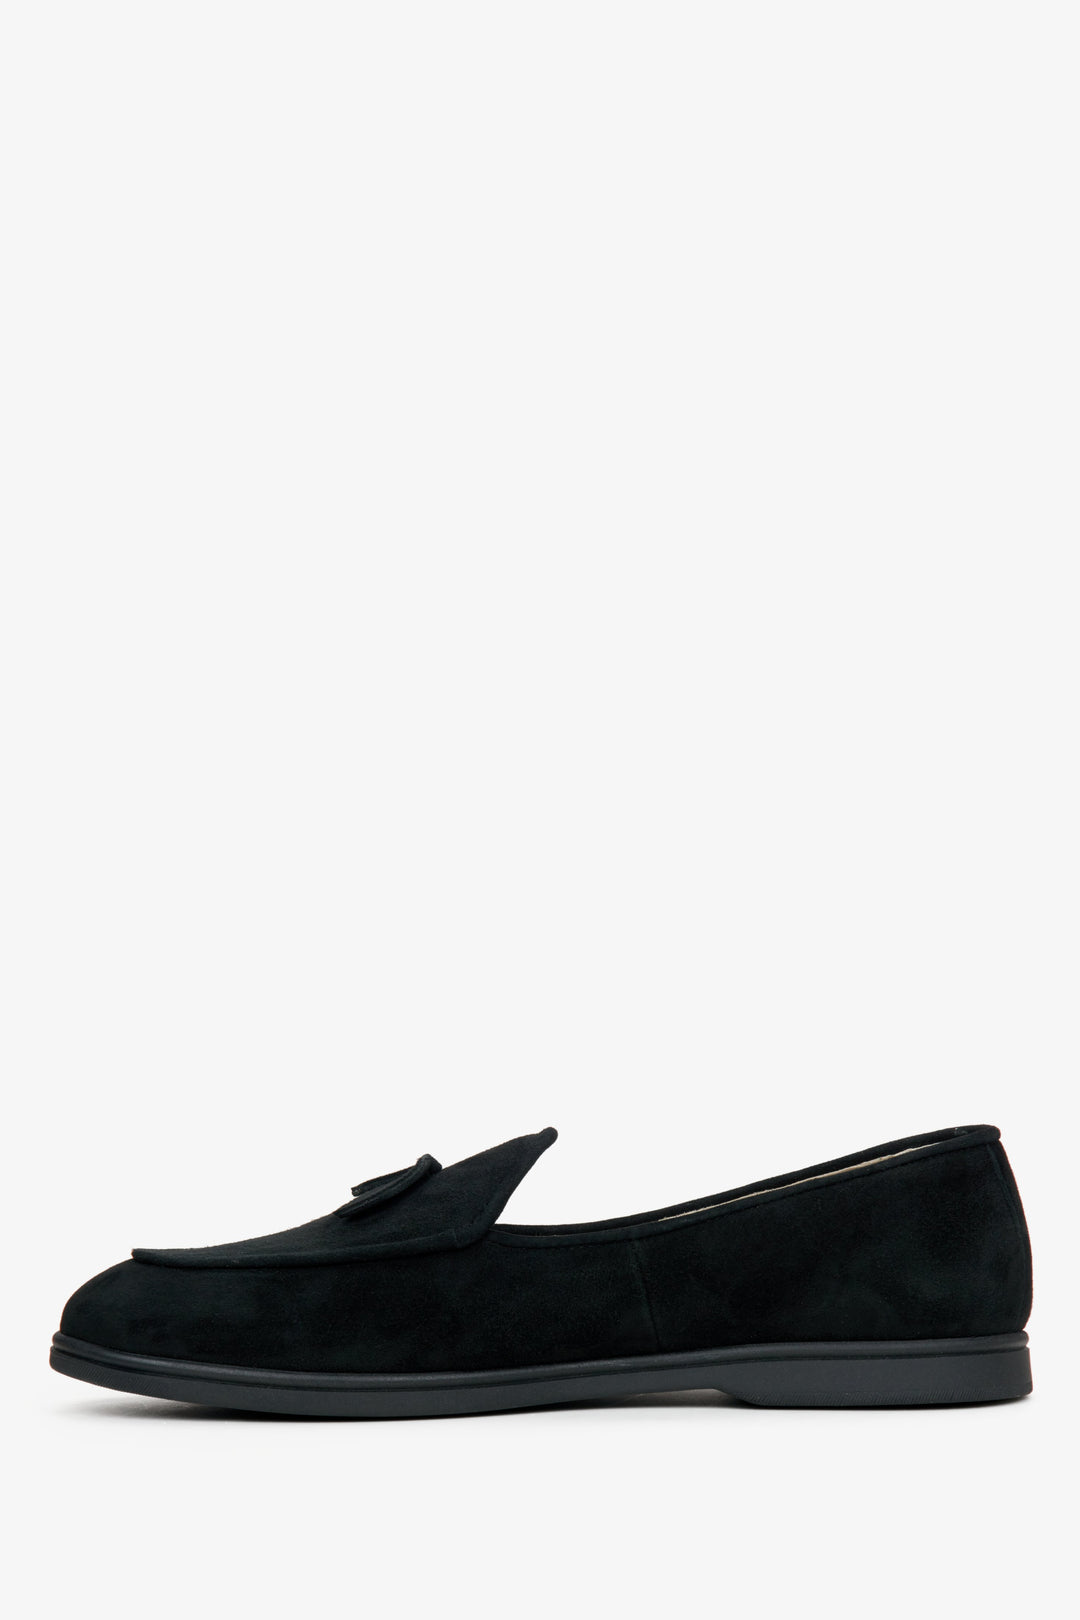 Women's black moccasins, genuine  velour by Estro - shoe profile.